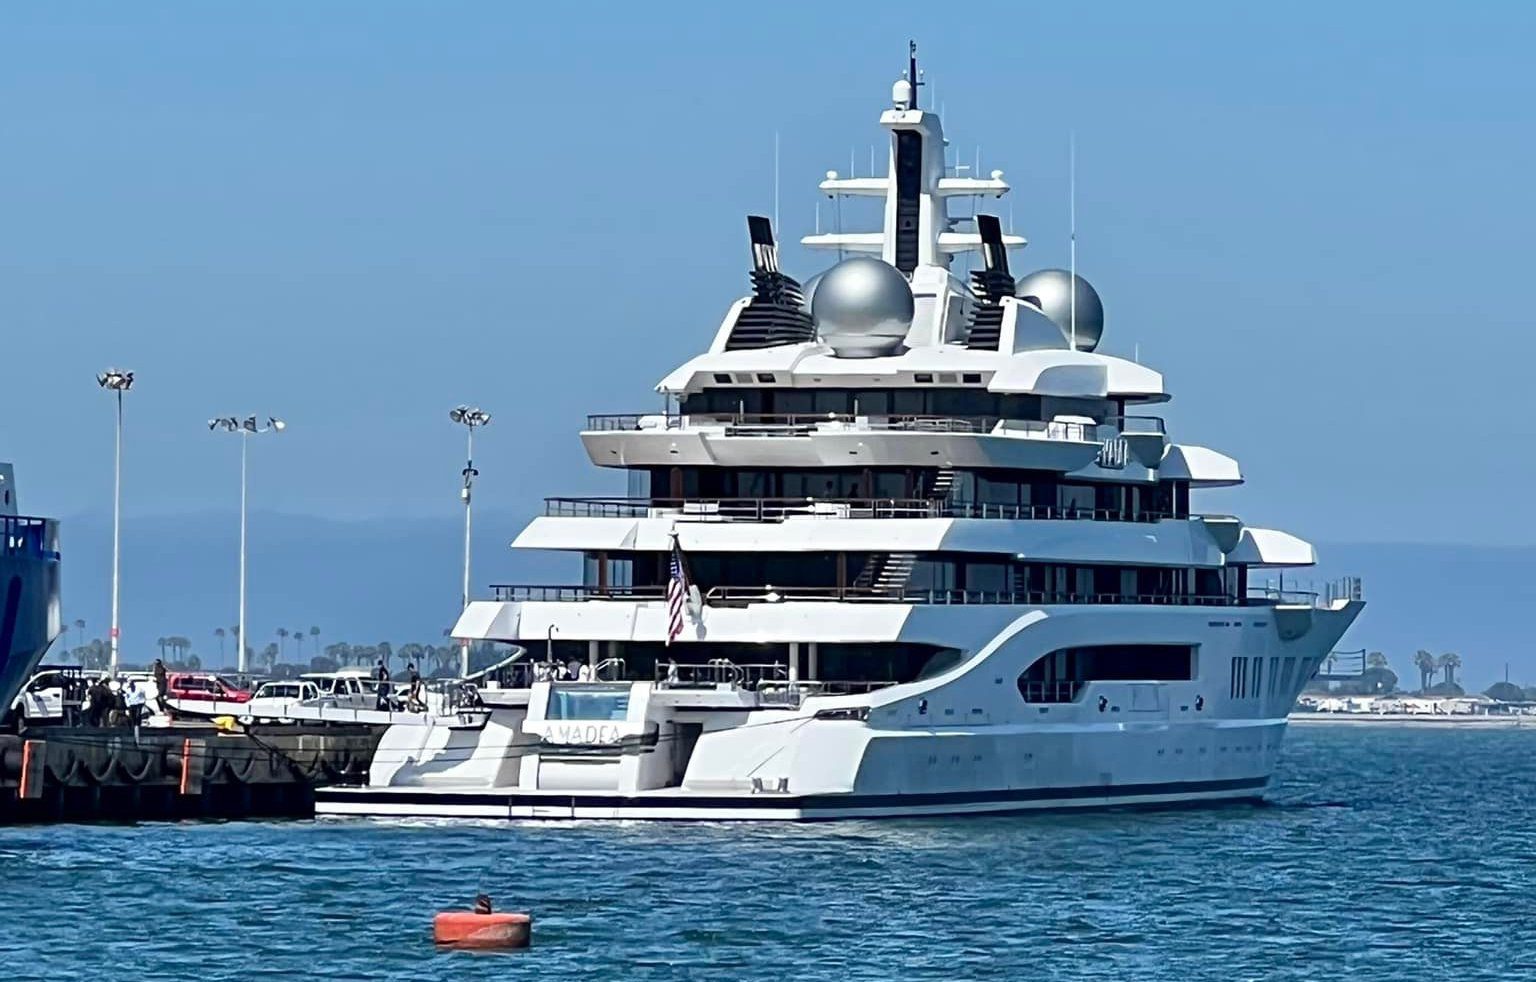 'Amadea' docked in San Diego